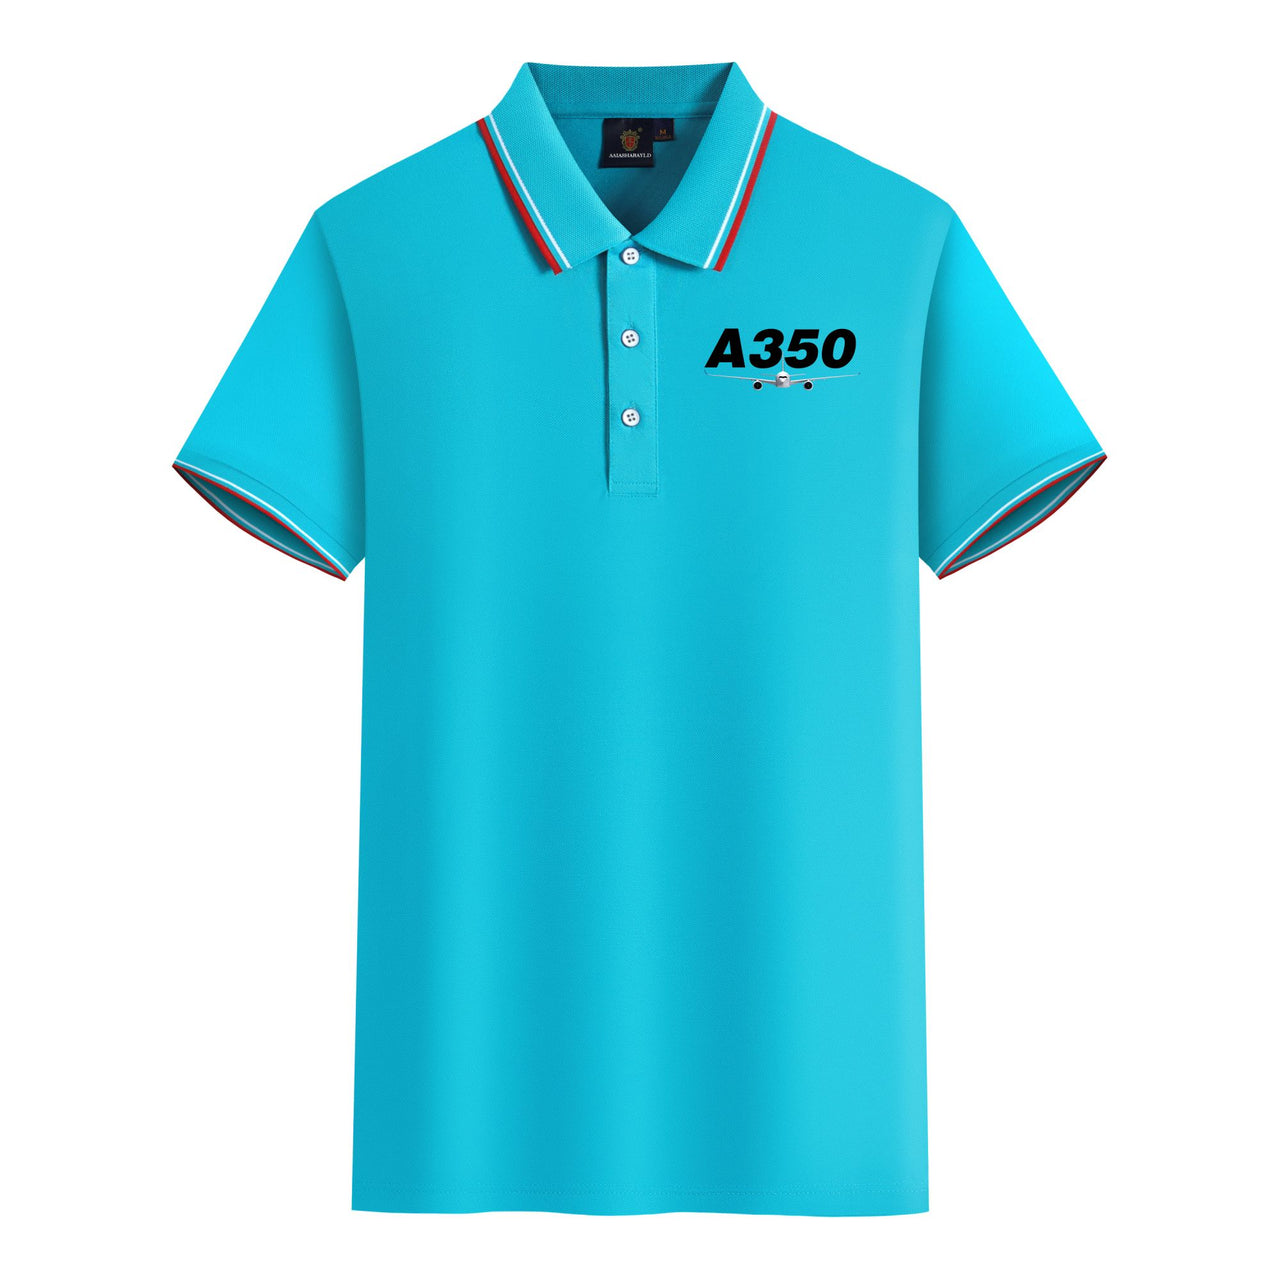 Super Airbus A350 Designed Stylish Polo T-Shirts